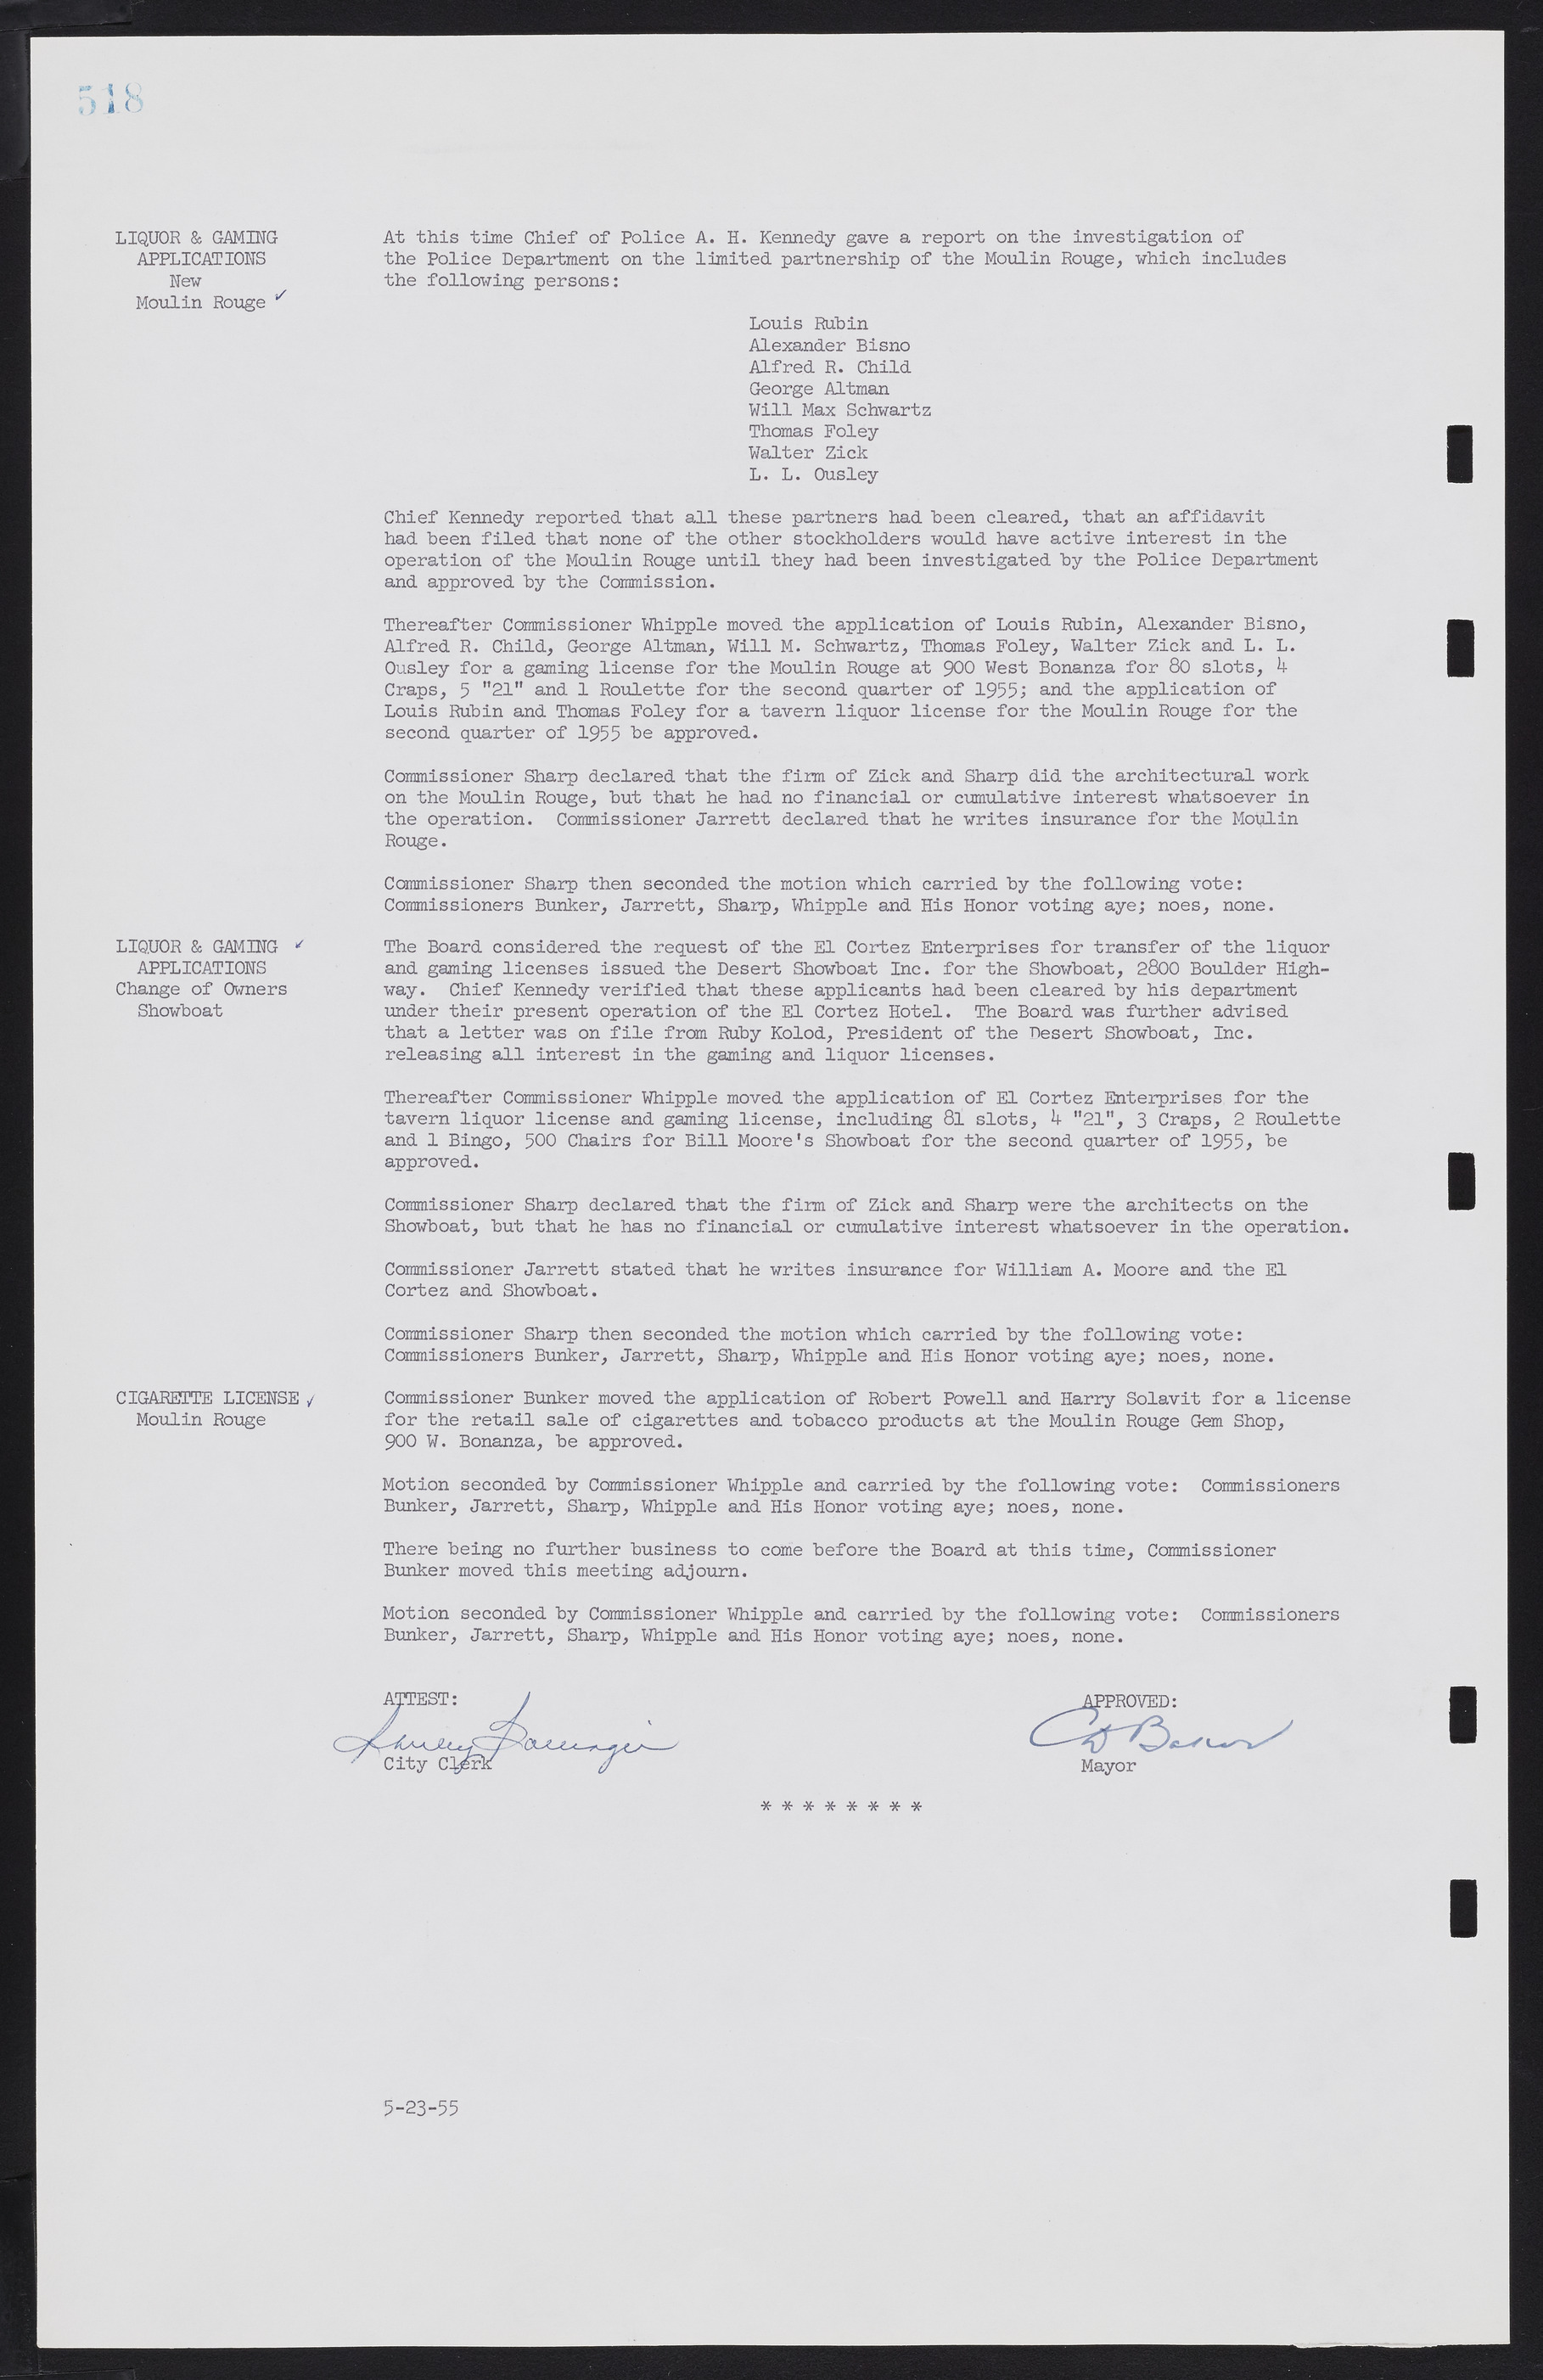 Las Vegas City Commission Minutes, February 17, 1954 to September 21, 1955, lvc000009-524